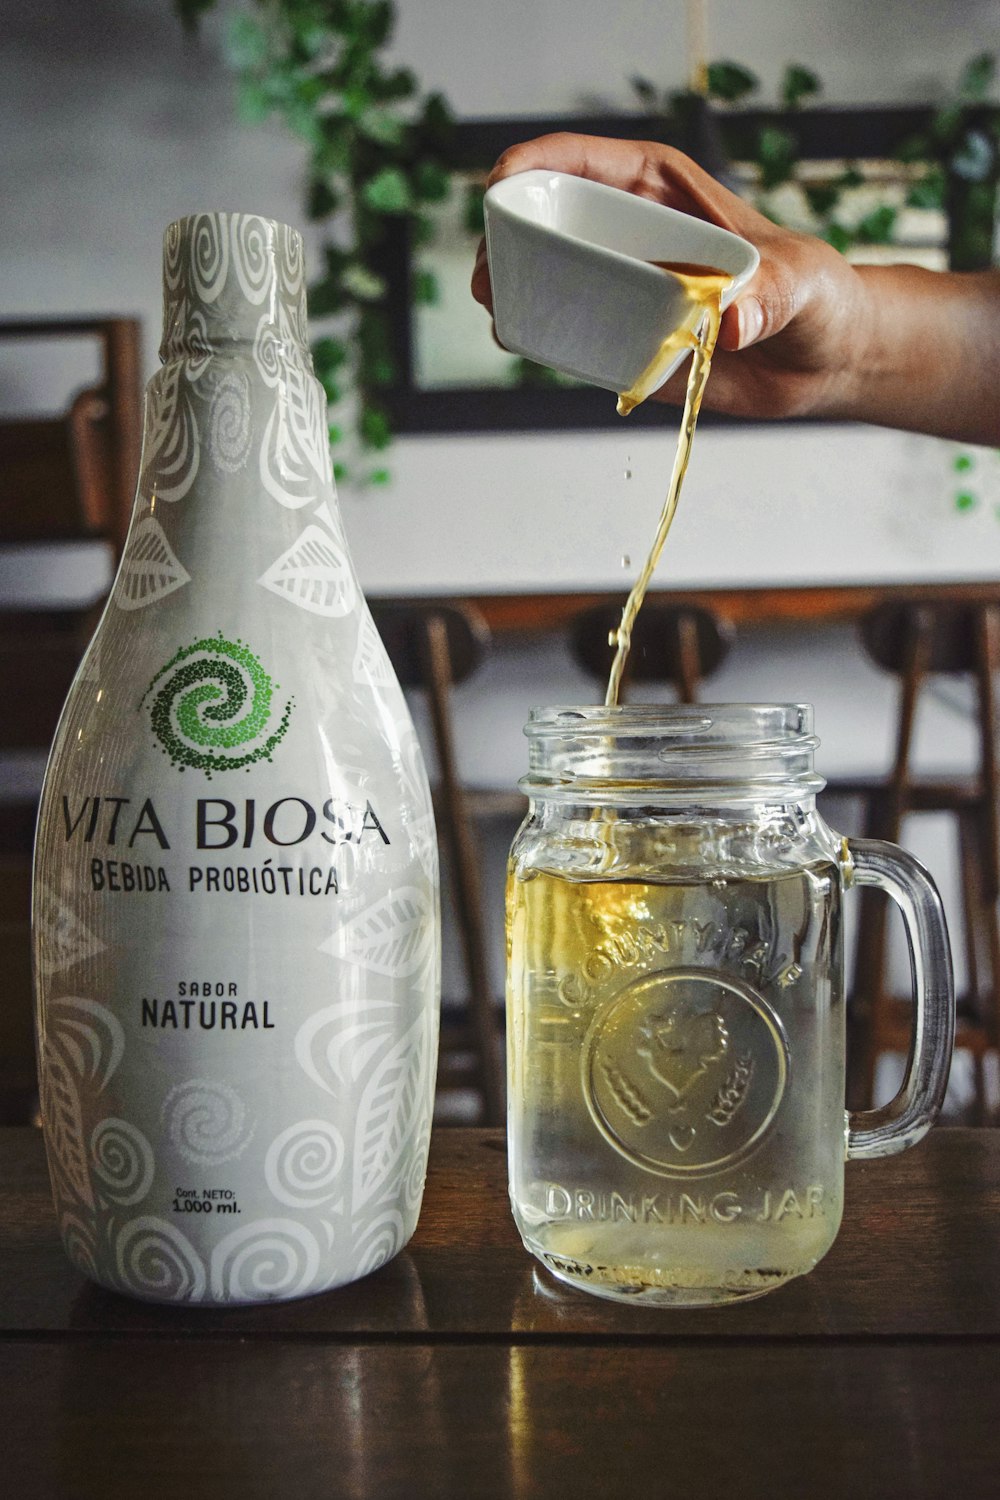 Vita Biosa bottle